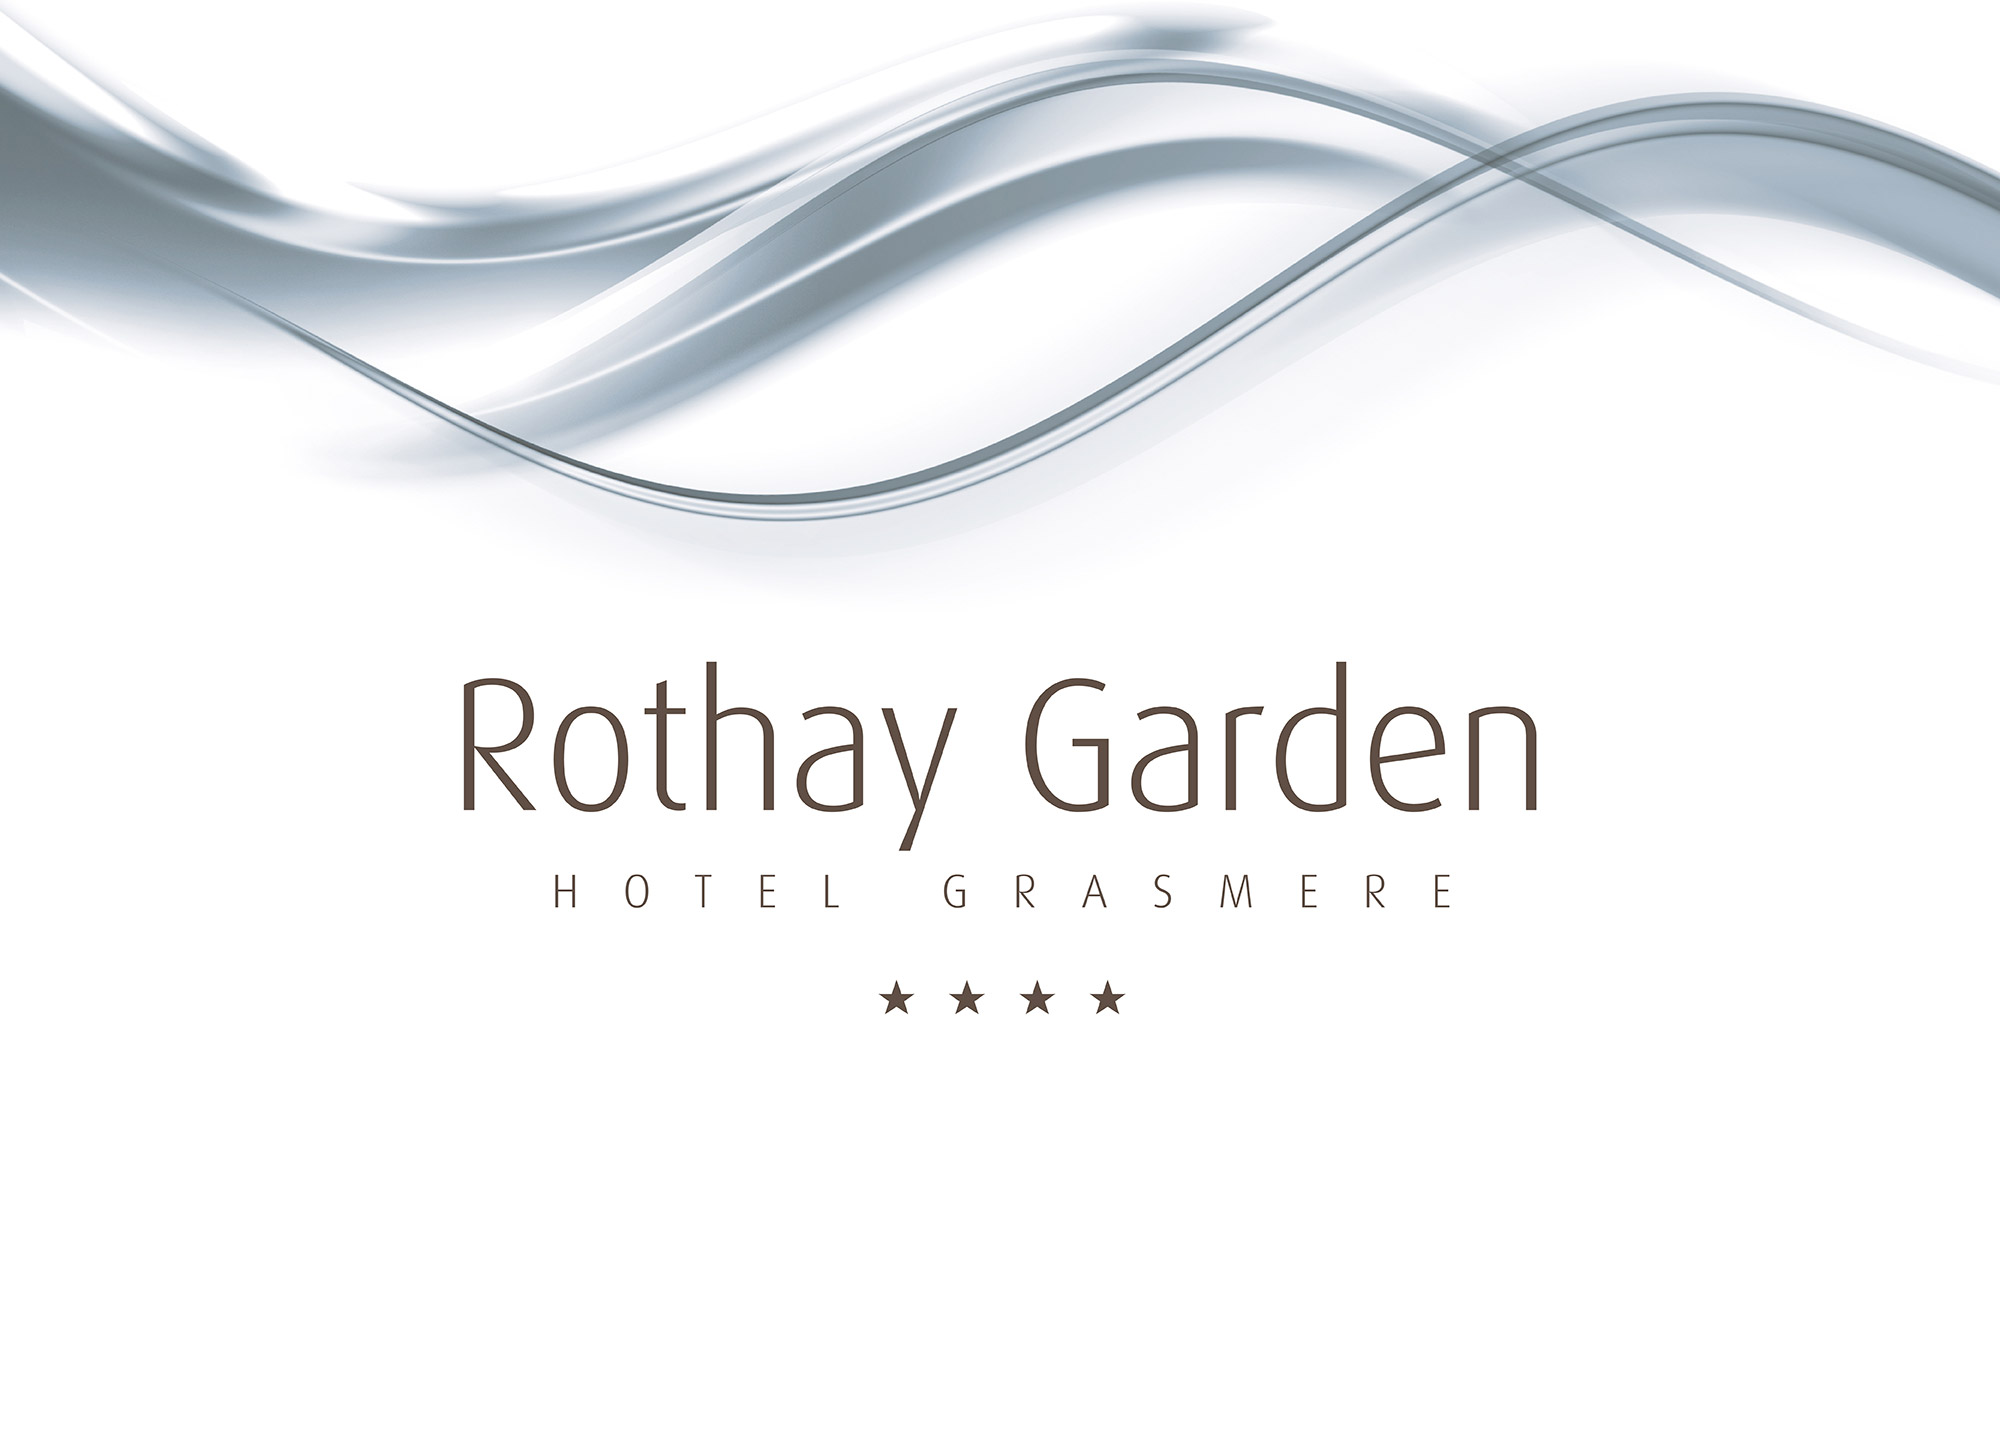 Rothay Garden Hotel